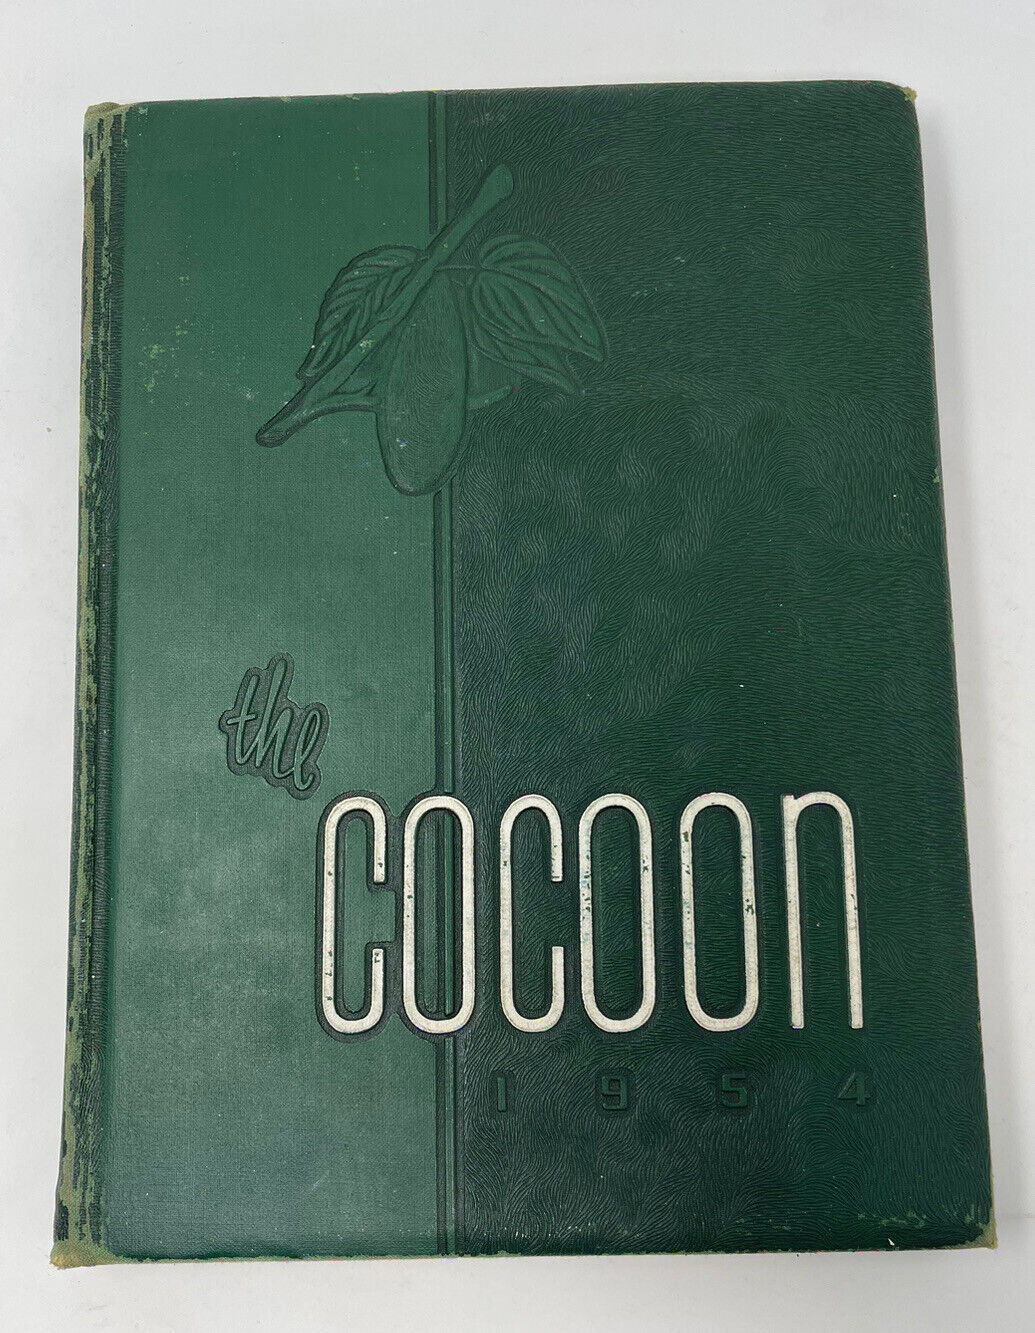 1954 Charles L. Coon High School Yearbook - Wilson, North Carolina